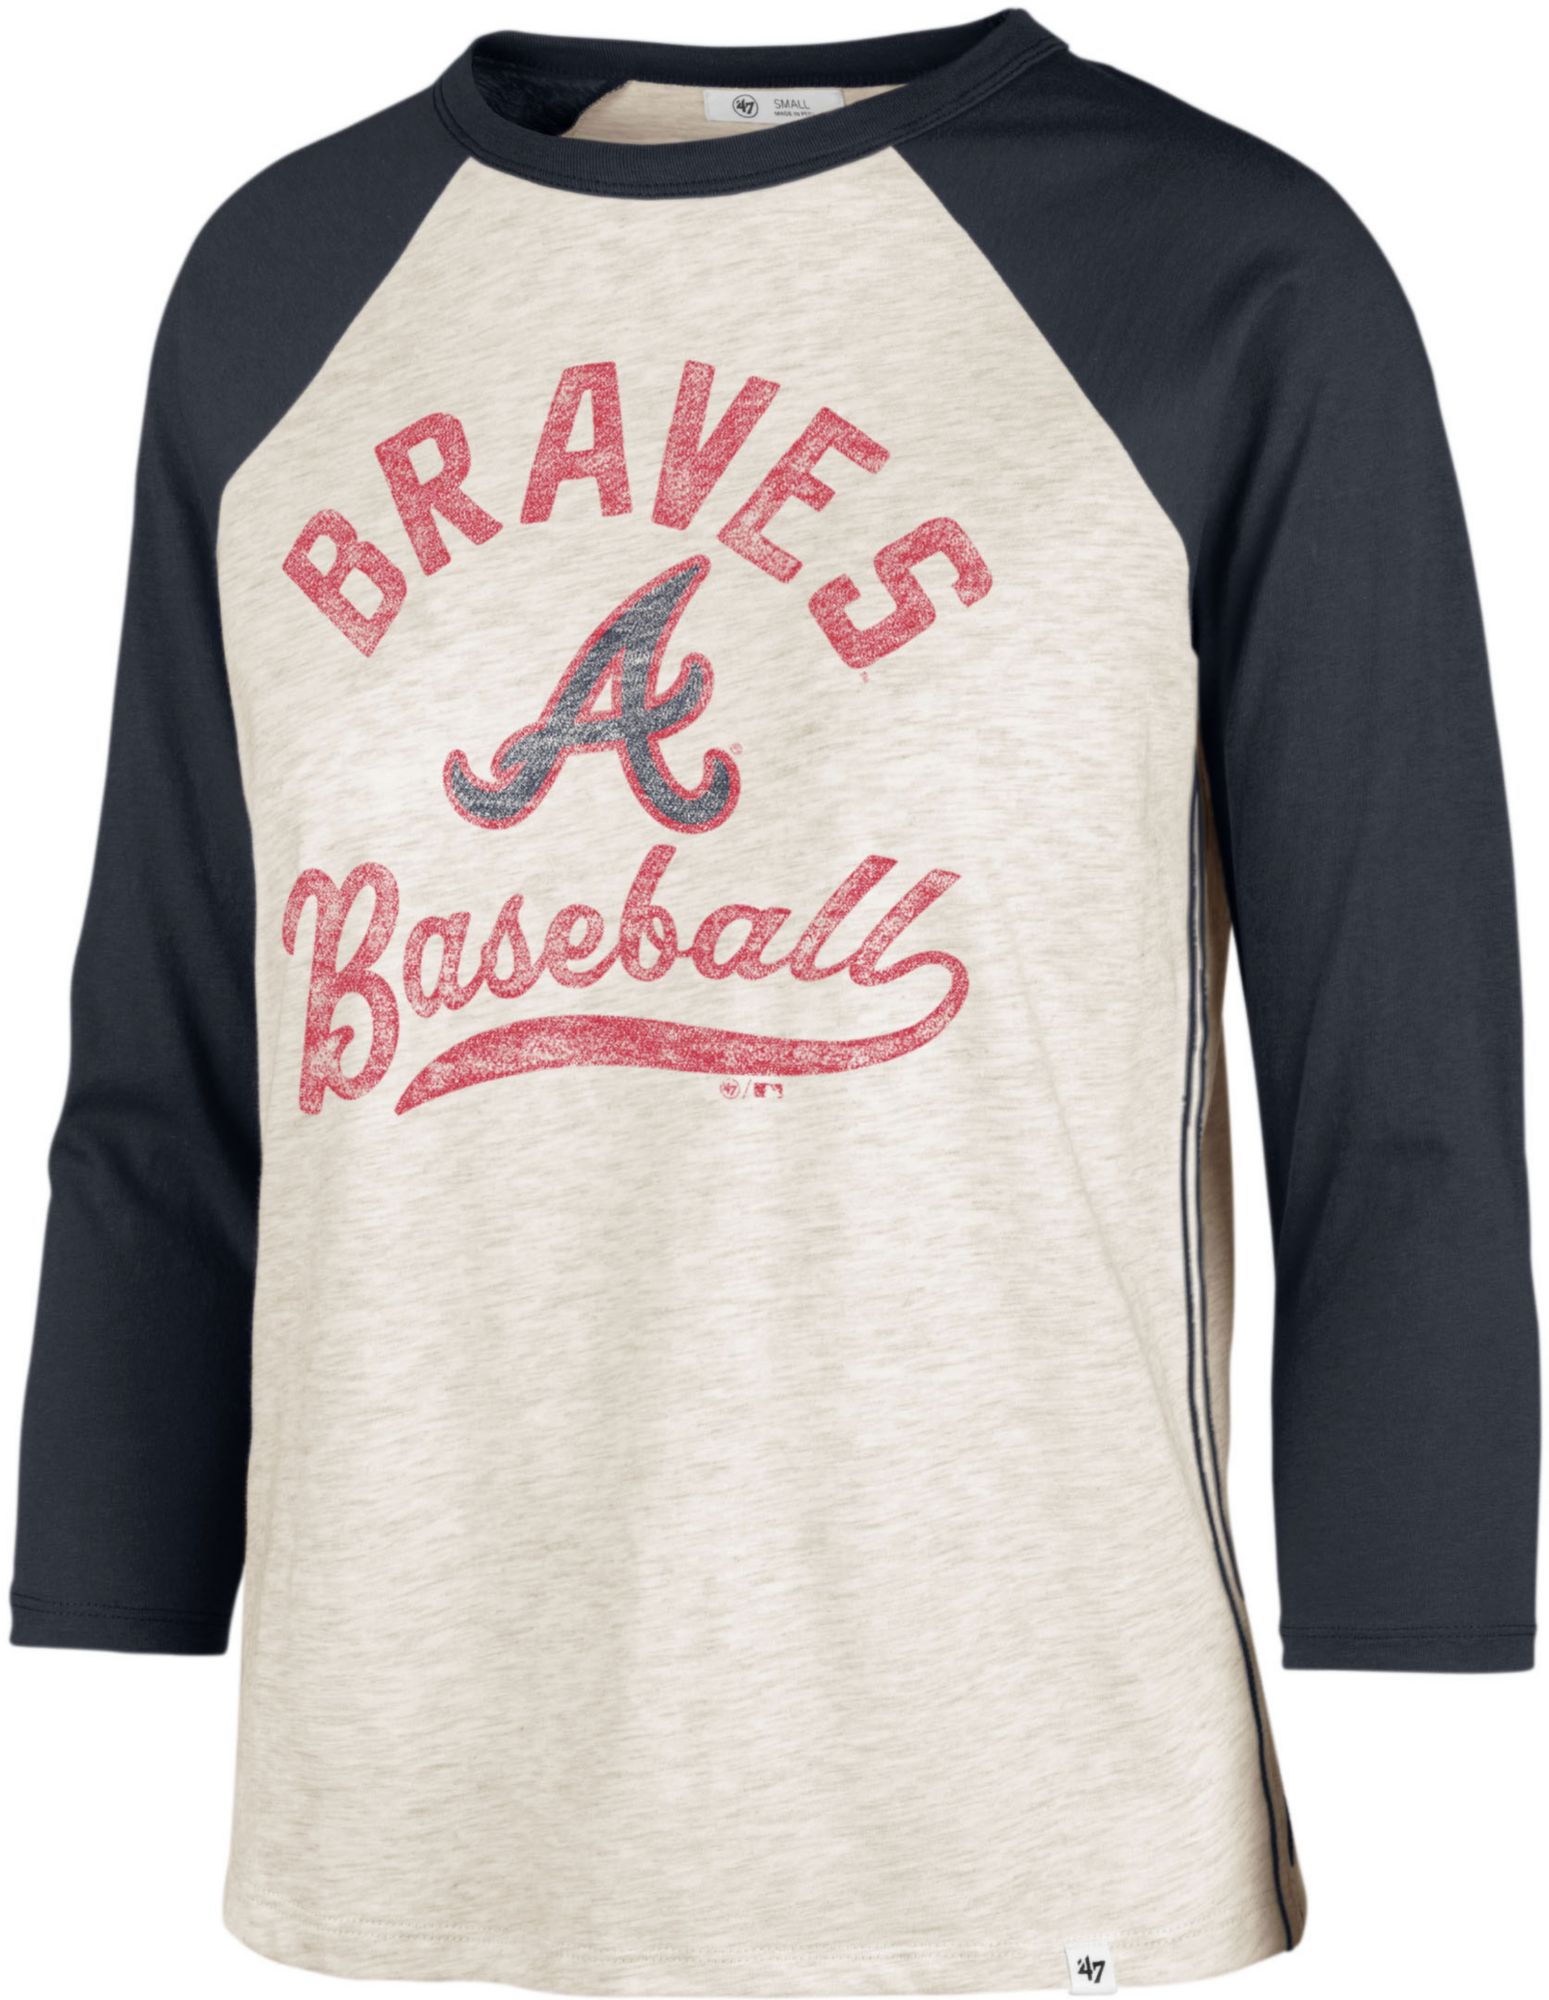 MLB Atlanta Braves City Connect (Ronald Acuña Jr.) Women's Replica Baseball  Jersey.